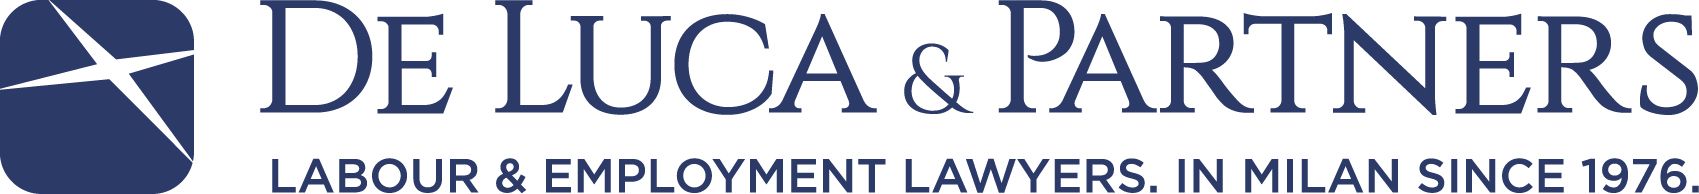 De Luca & Partners logo